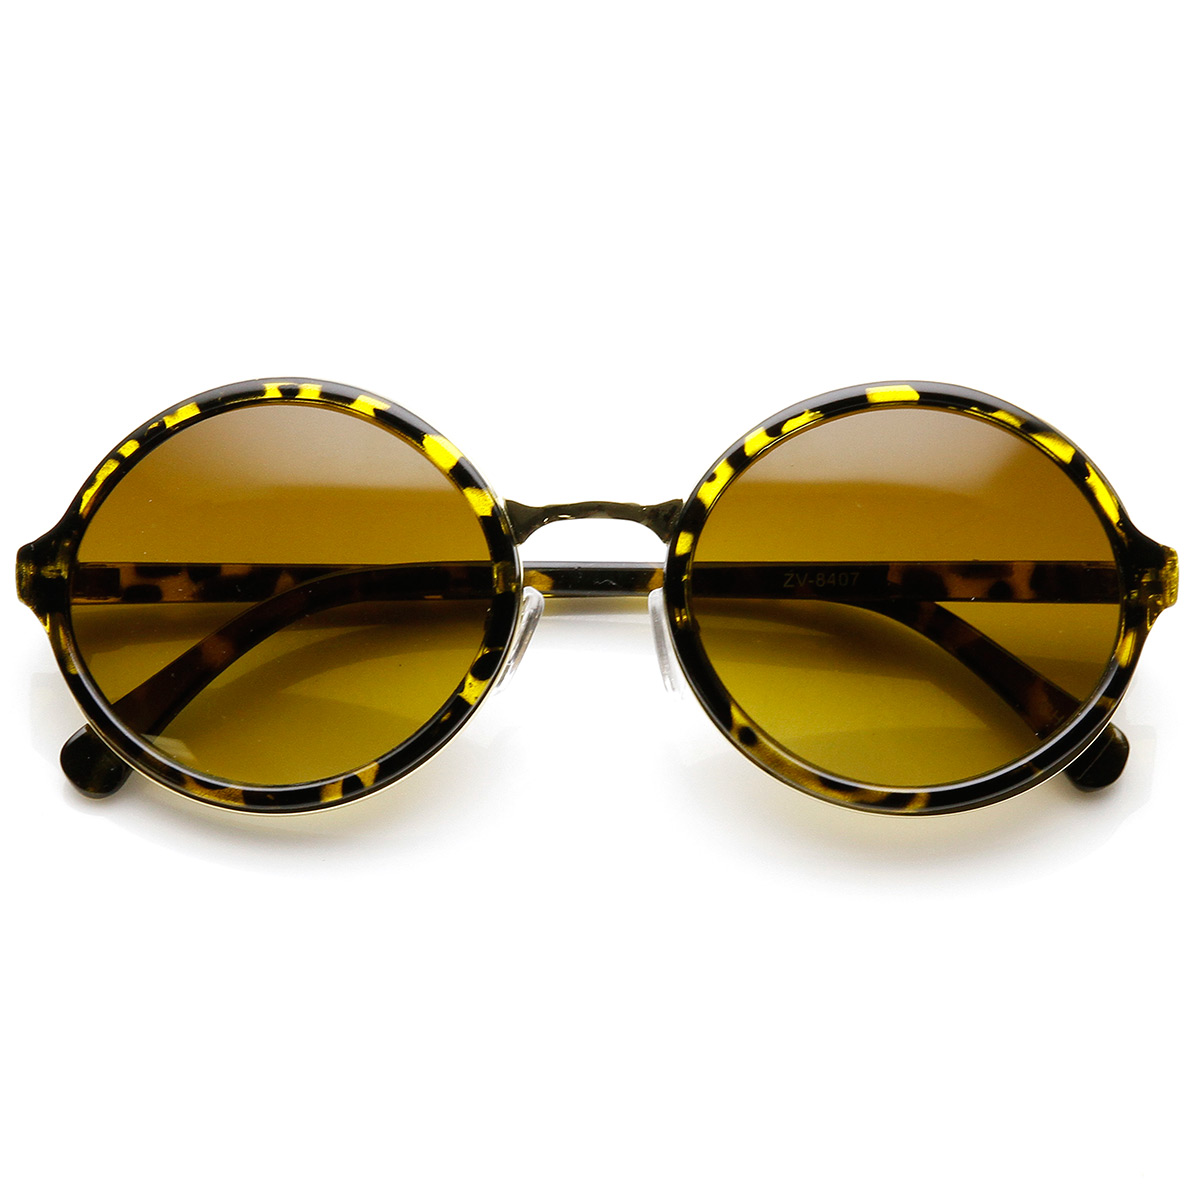 Vintage Inspired Classic Round Circle Sunglasses w/ Metal Bridge | eBay